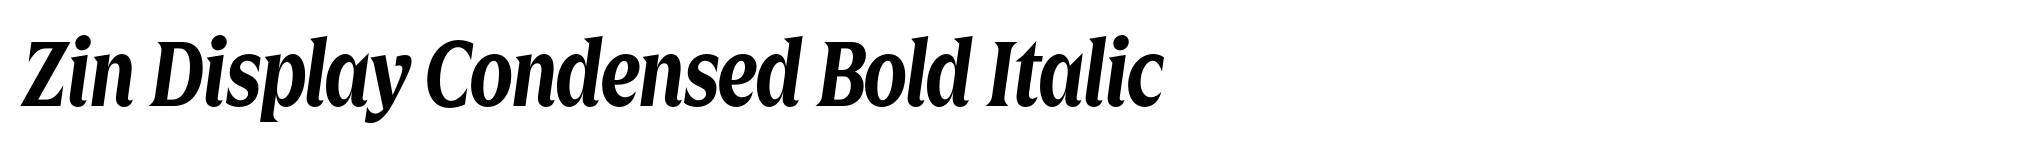 Zin Display Condensed Bold Italic image